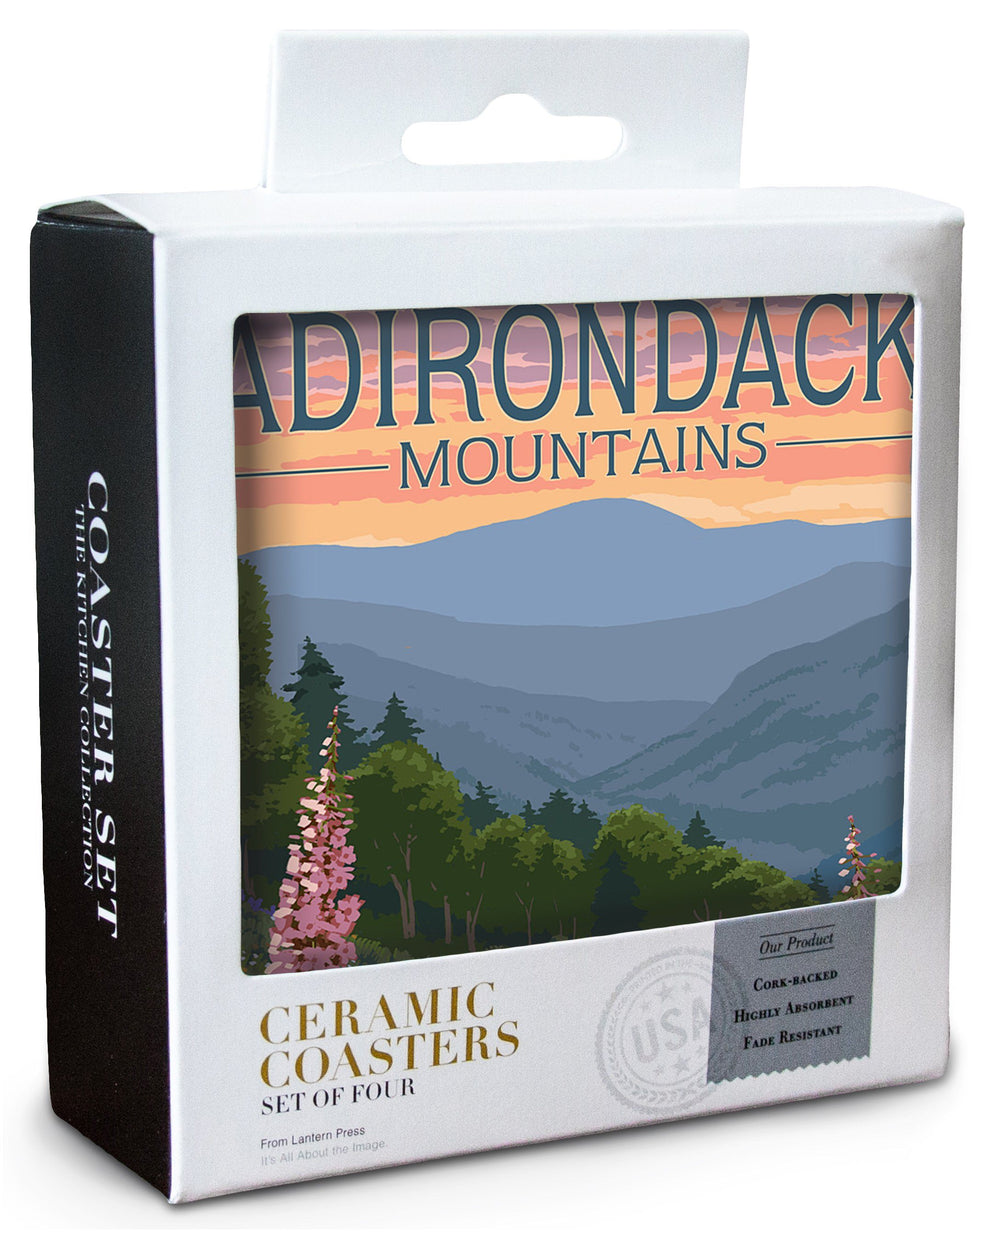 Adirondack Mountains, New York, Bears & Spring Flowers, Lantern Press Artwork, Coaster Set Coasters Lantern Press 